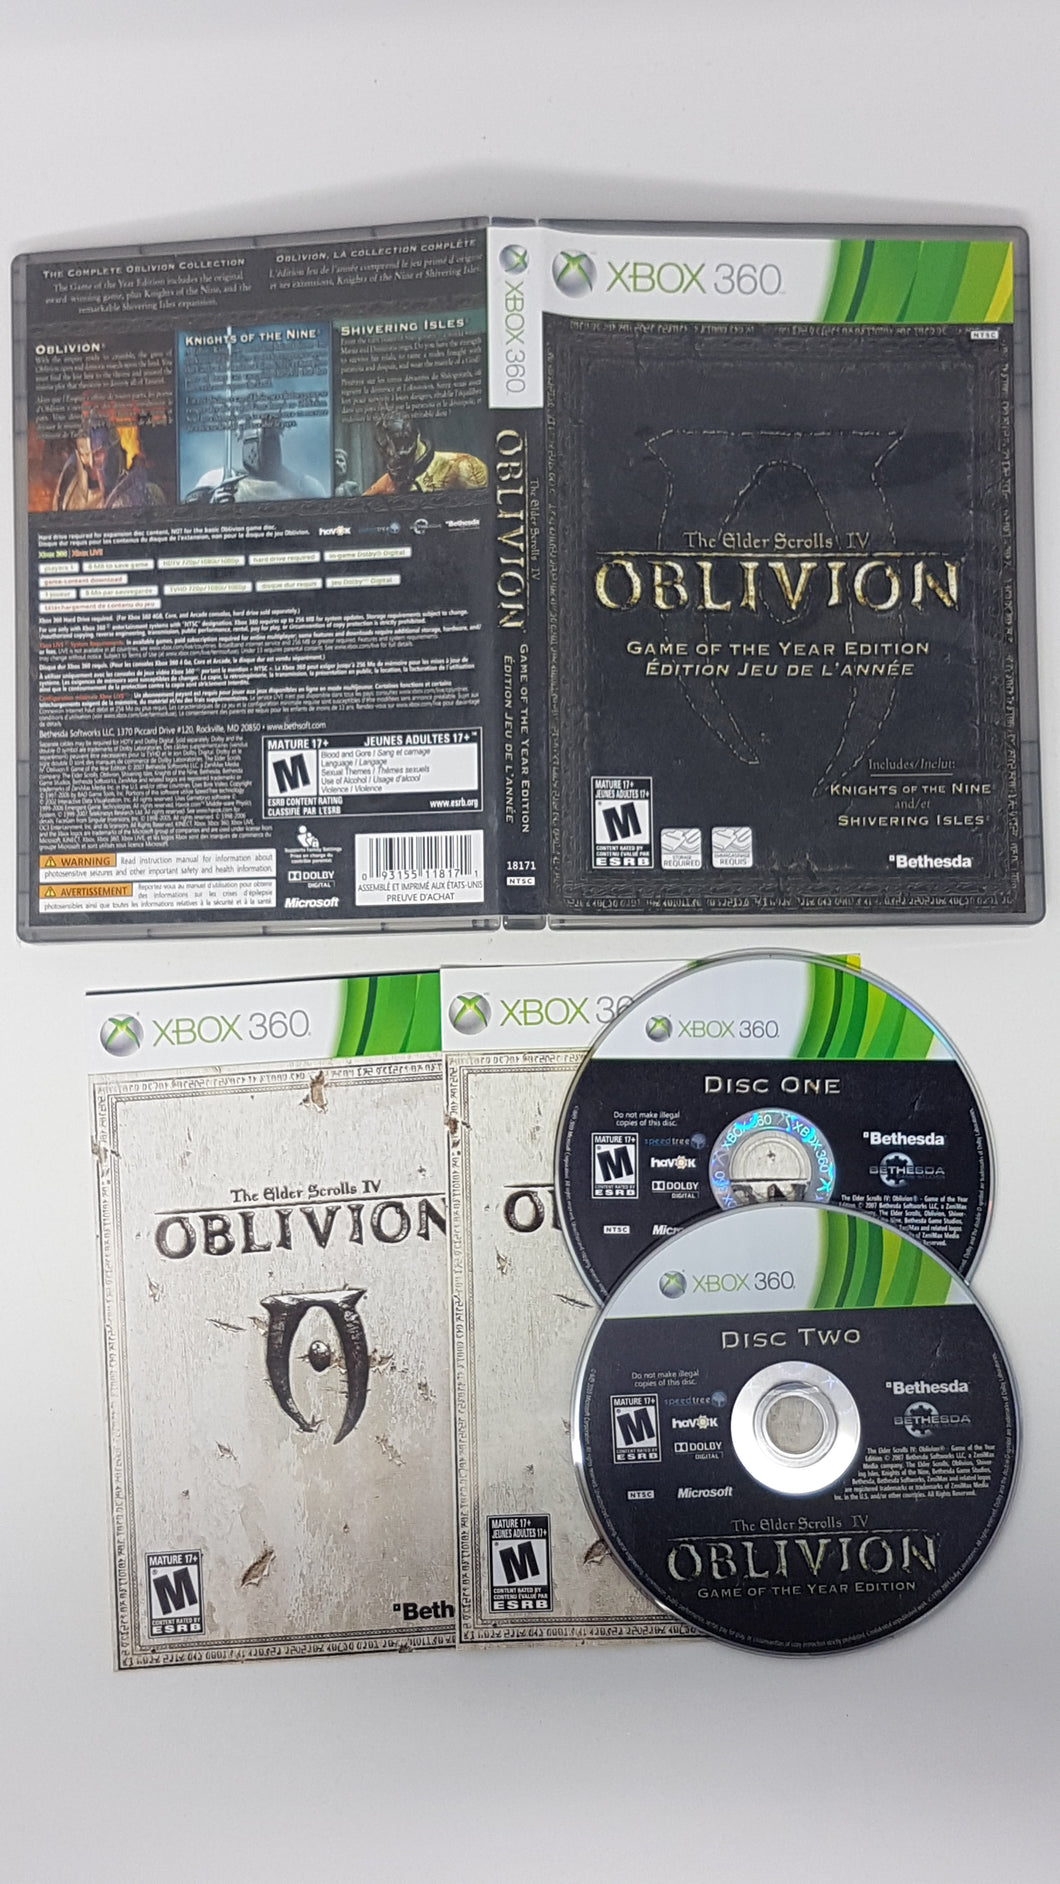 Elder Scrolls IV Oblivion [Jeu de l'année] - Microsoft Xbox 360